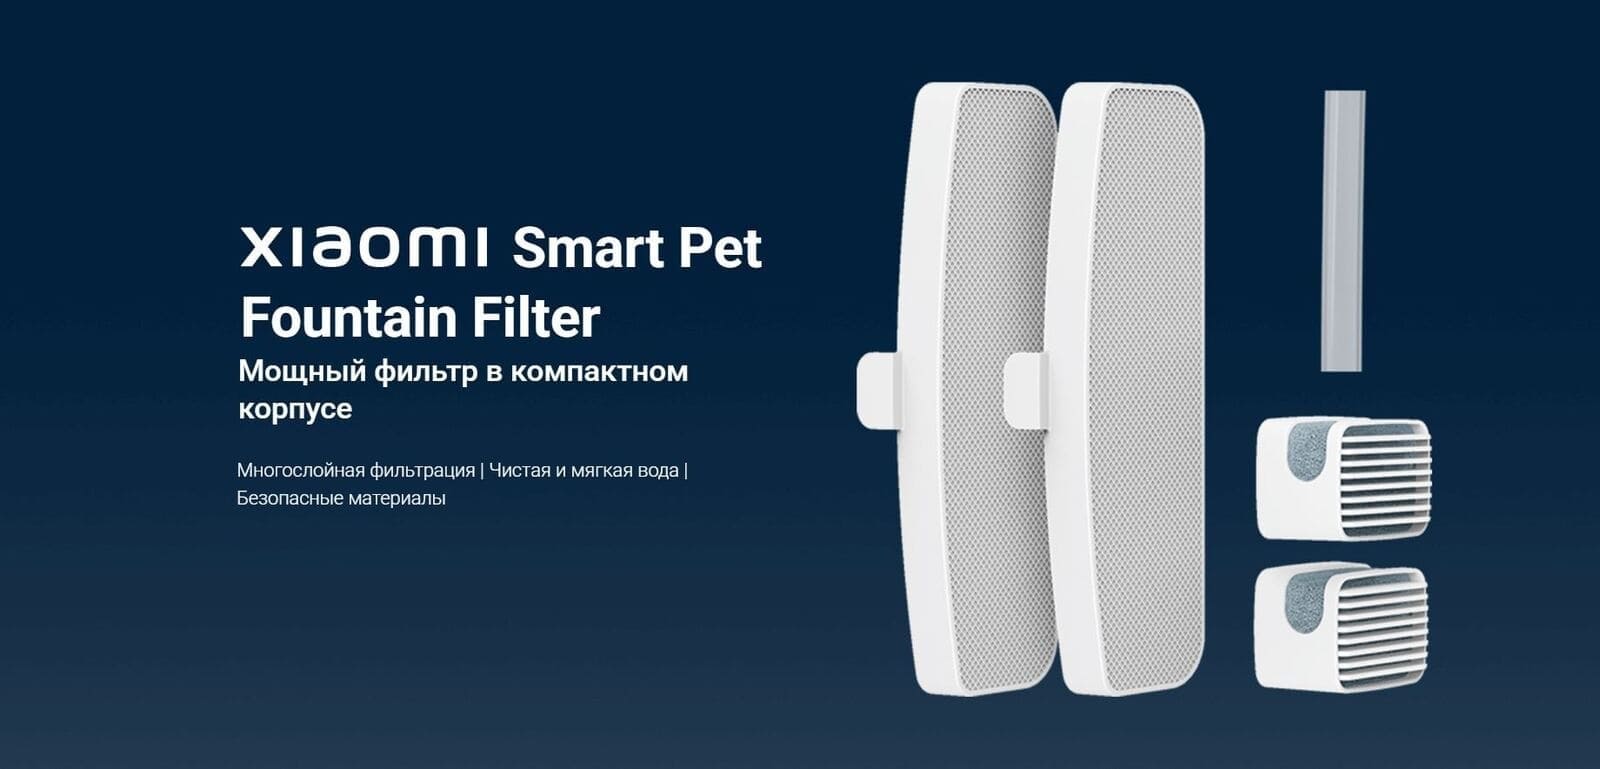     Xiaomi Smart Pet Fountain Filter.